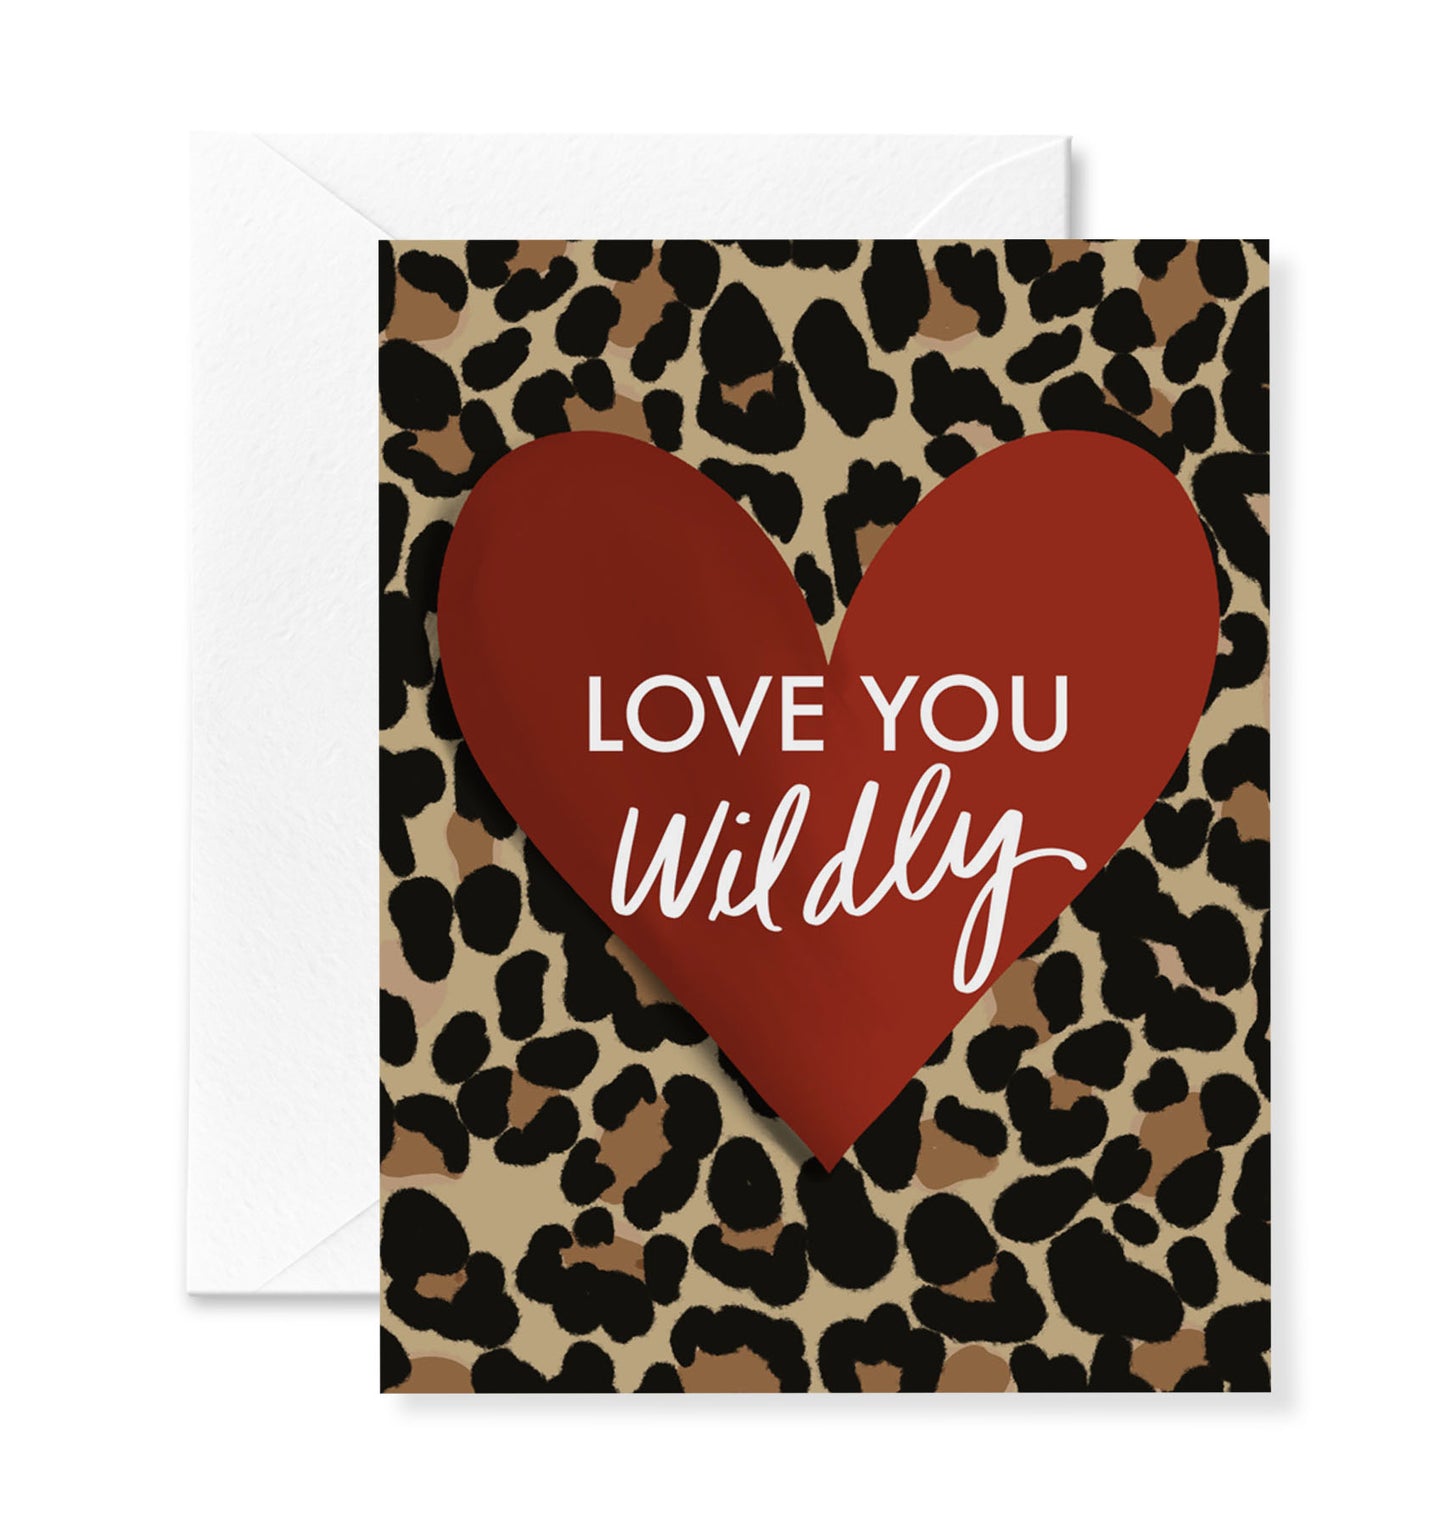 Wild Love Card